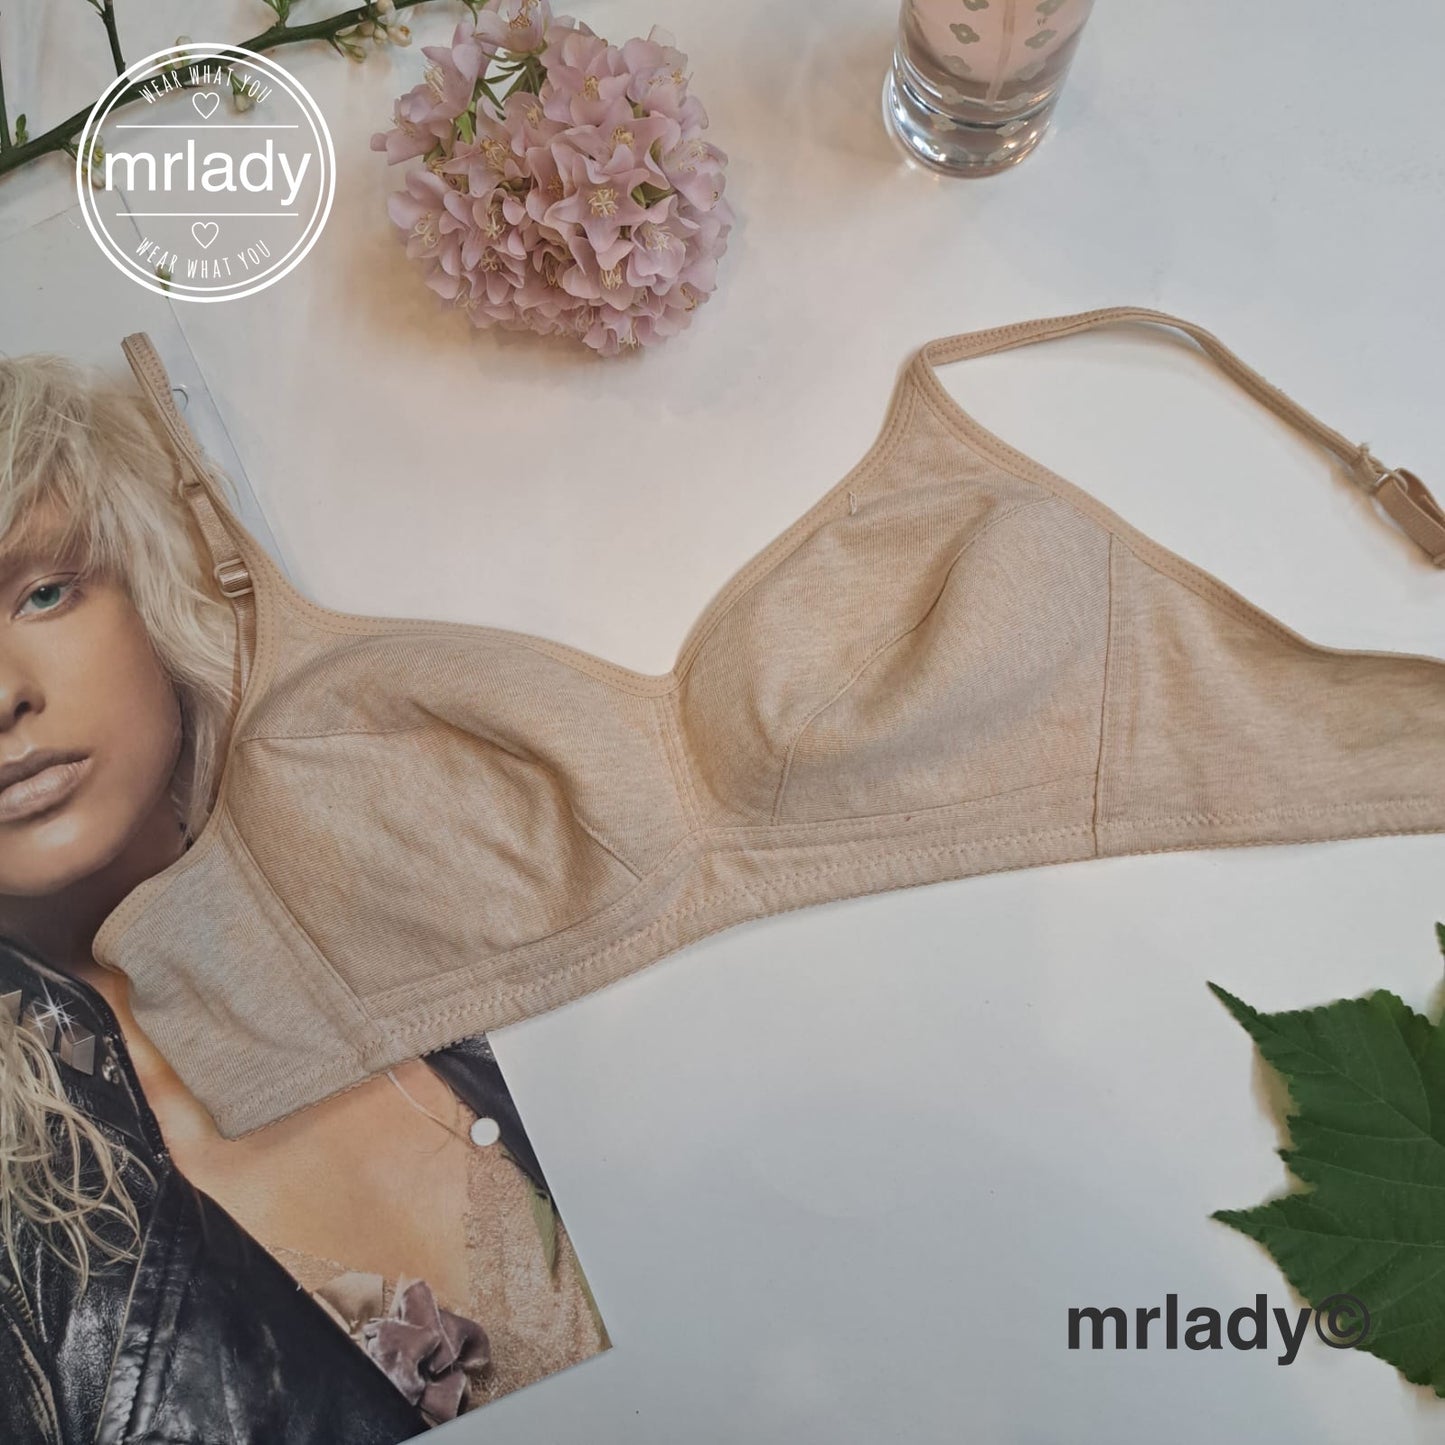 DAILY WEAR SOFT BRA – mrlady - Lingerie Store